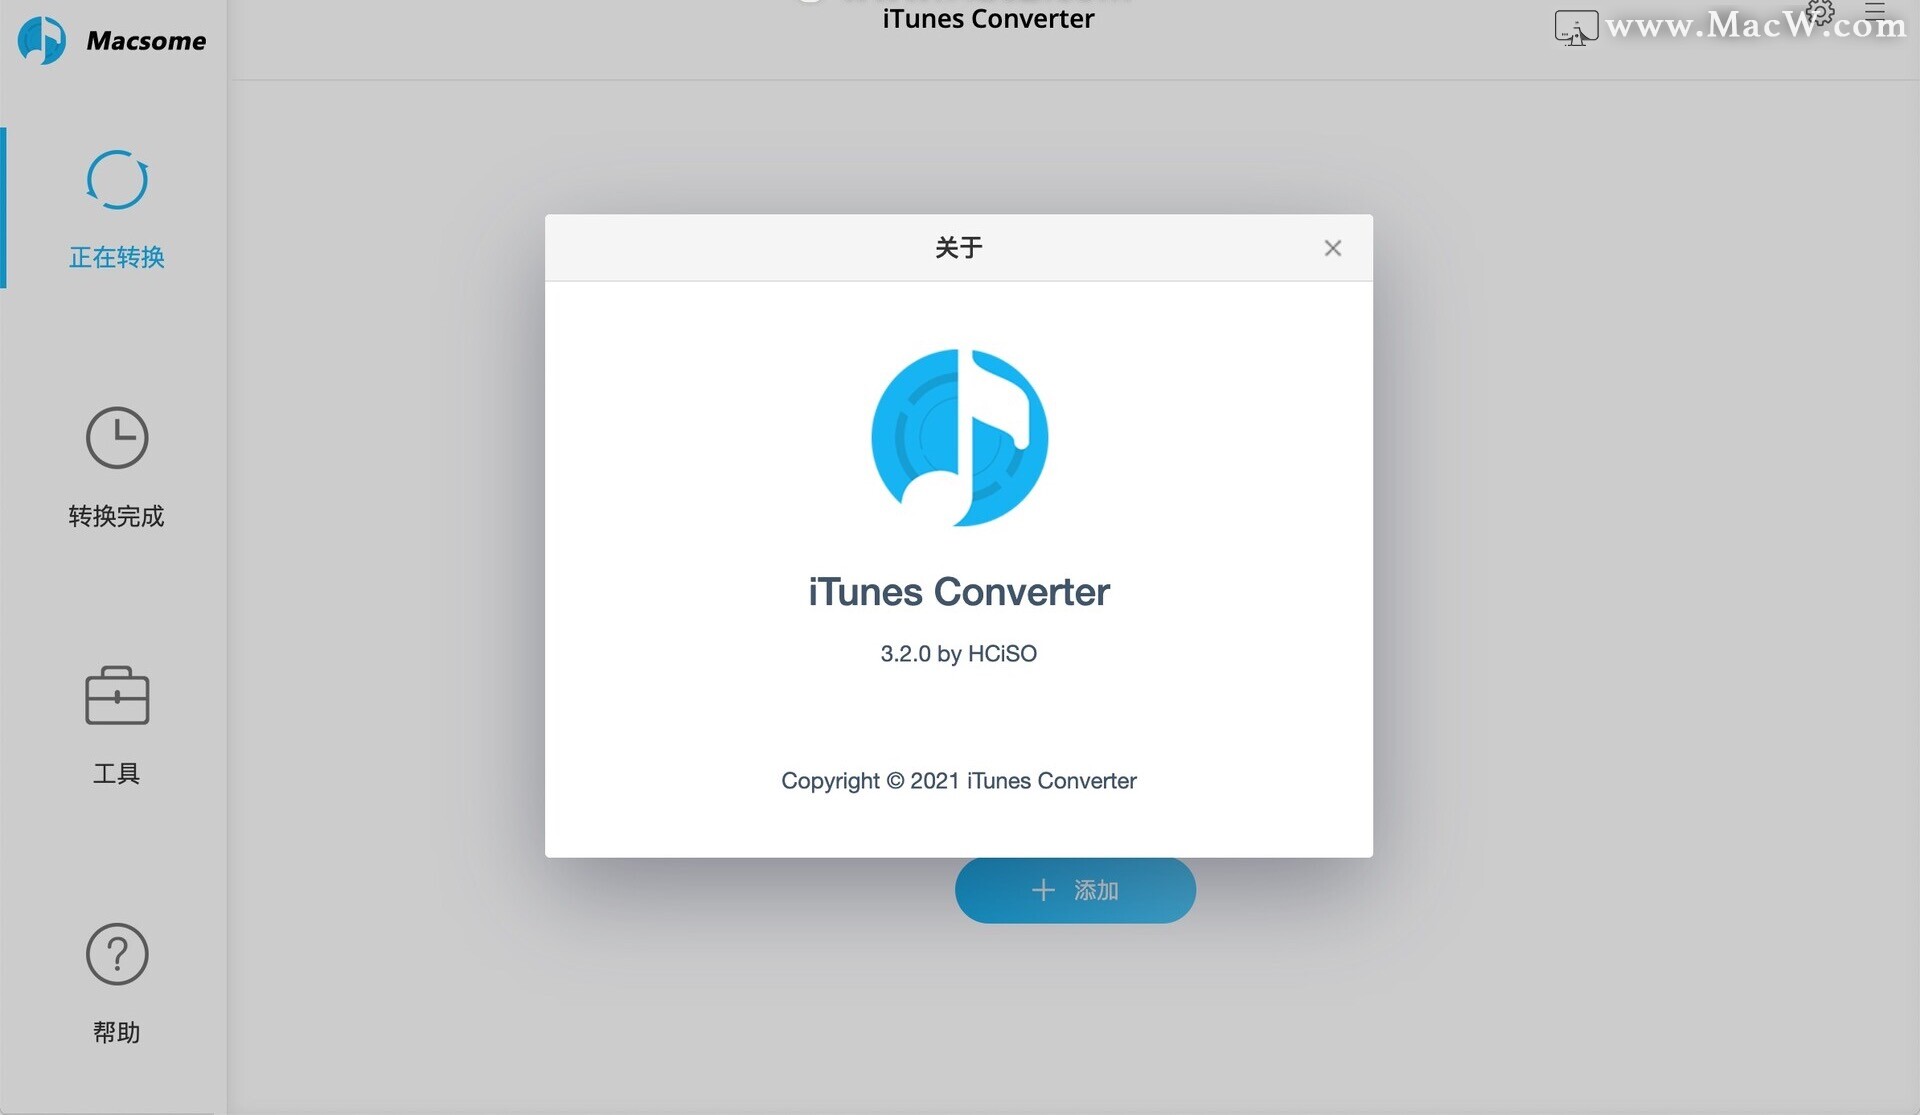 Macsome iTunes Converter Mac(音乐转换器) v3.2.0直装版 - 图1